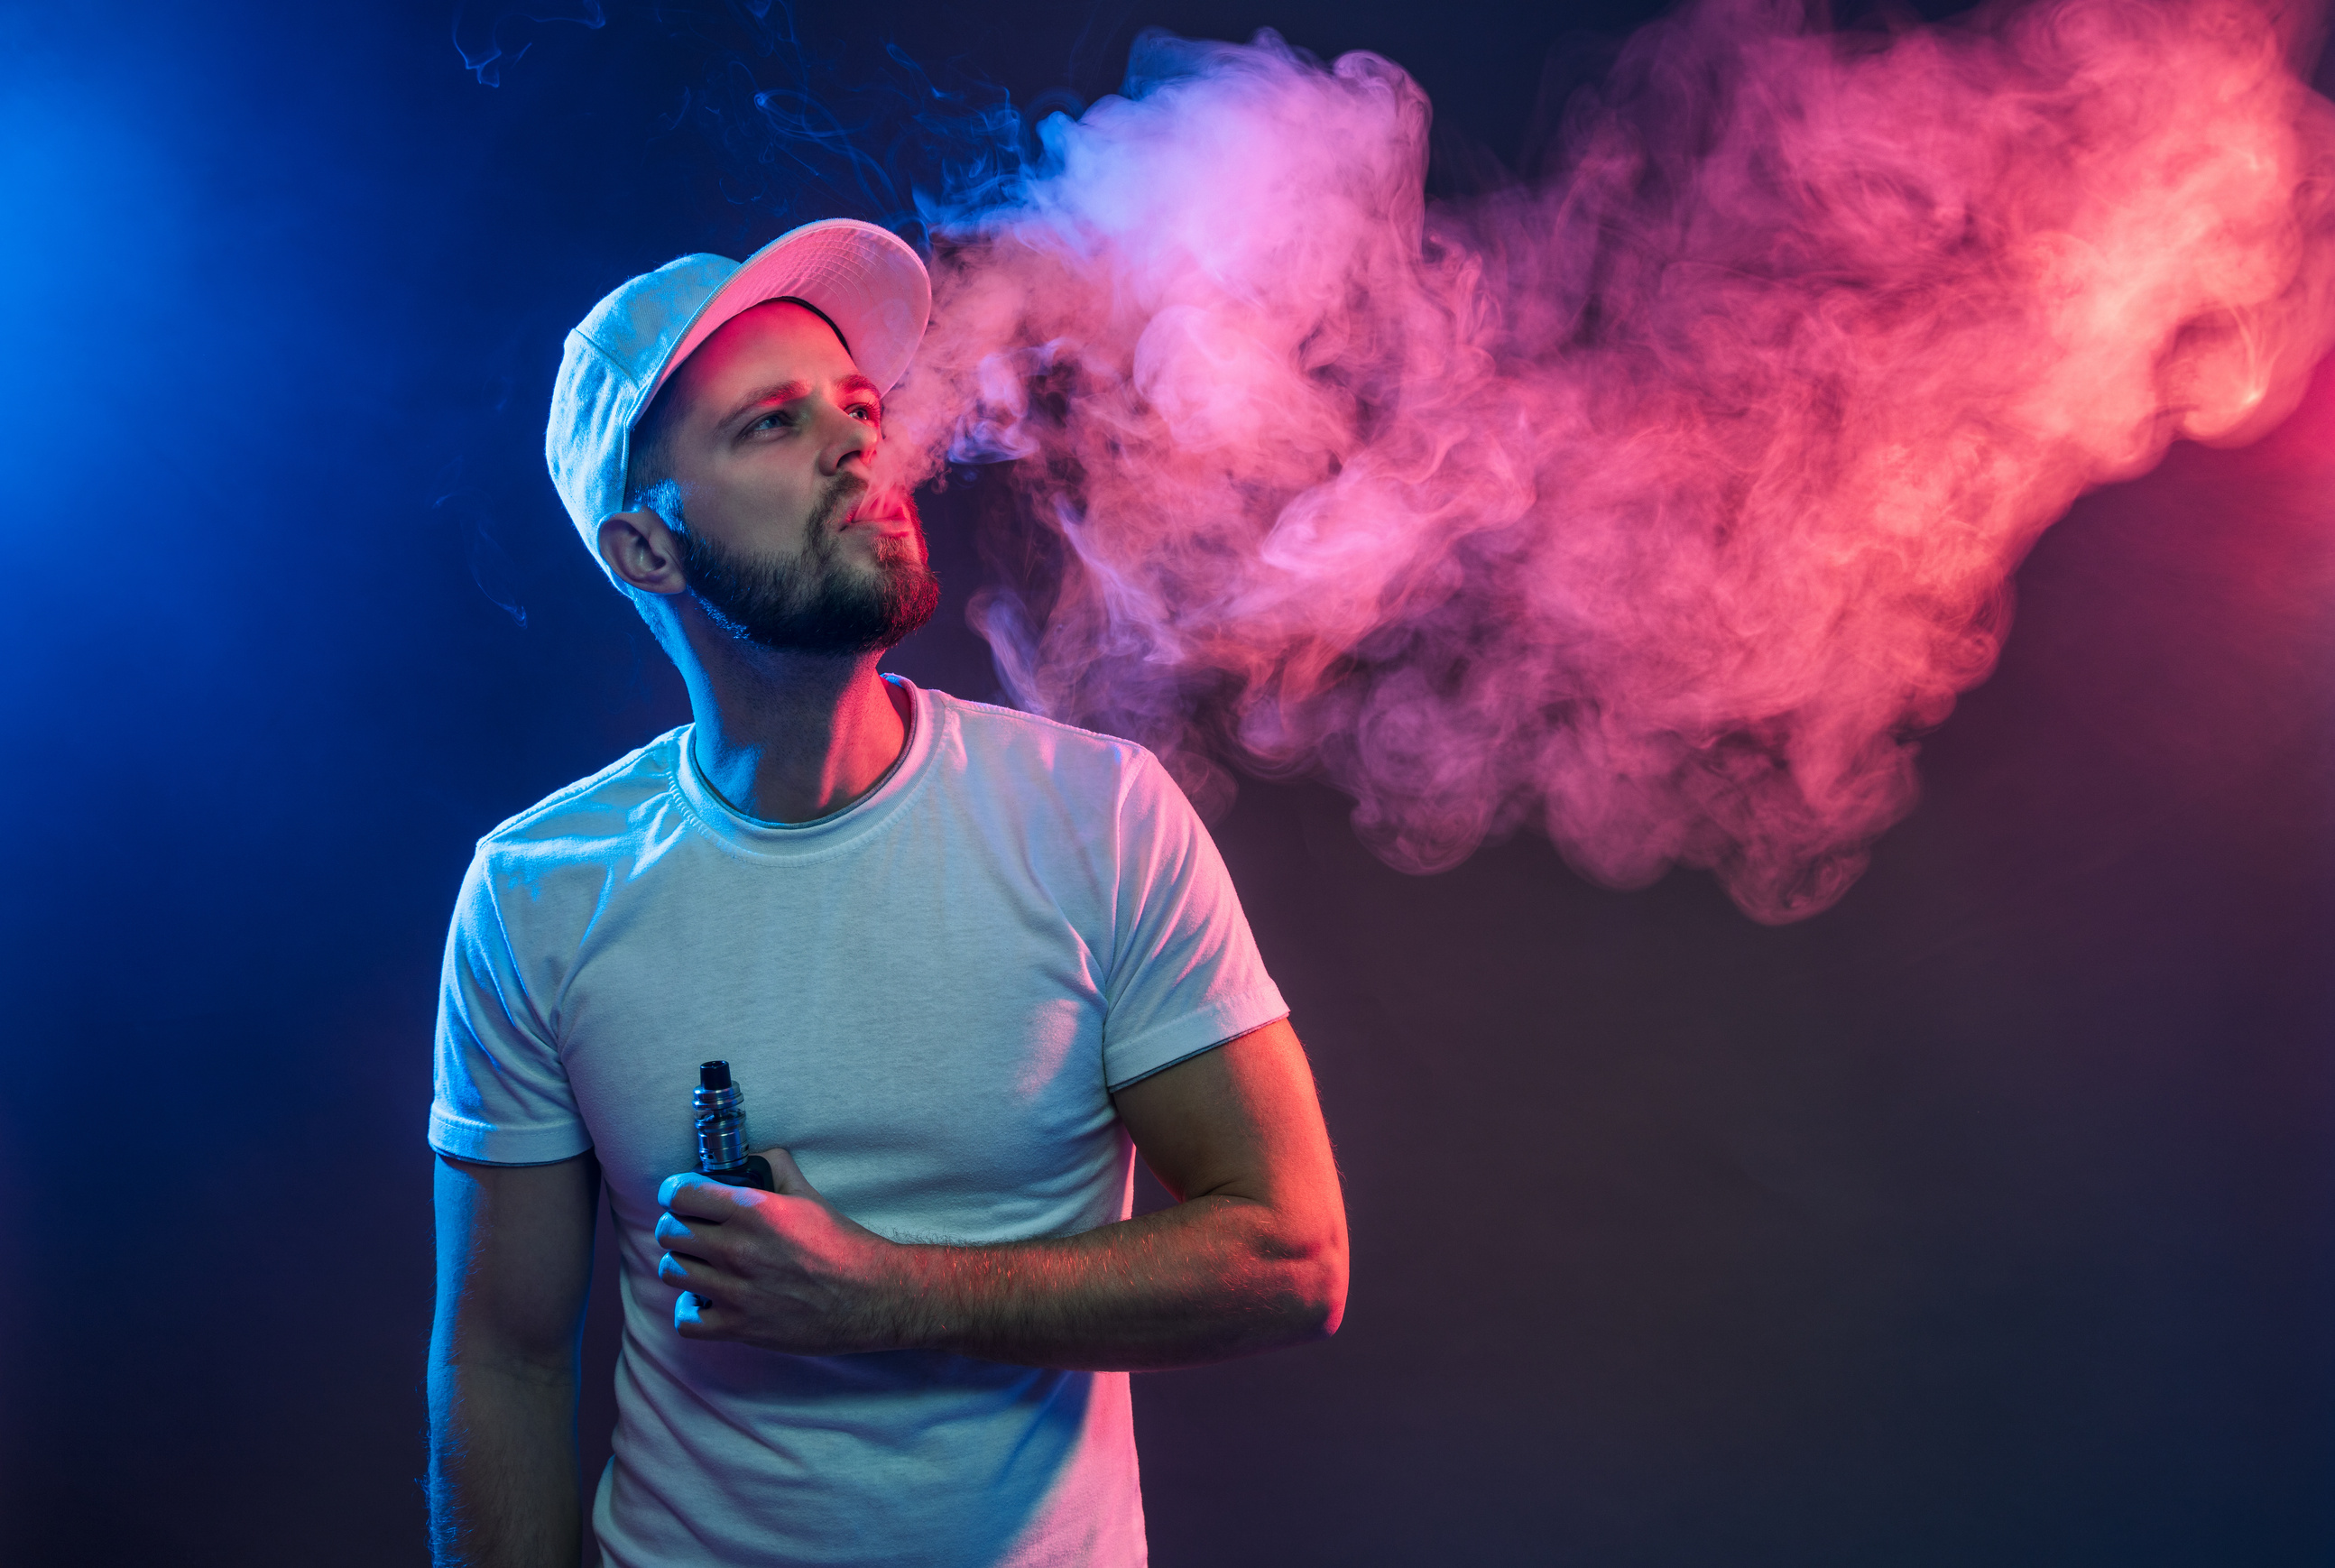 Man Vaping E-Cigarette on Colorful Studio Background